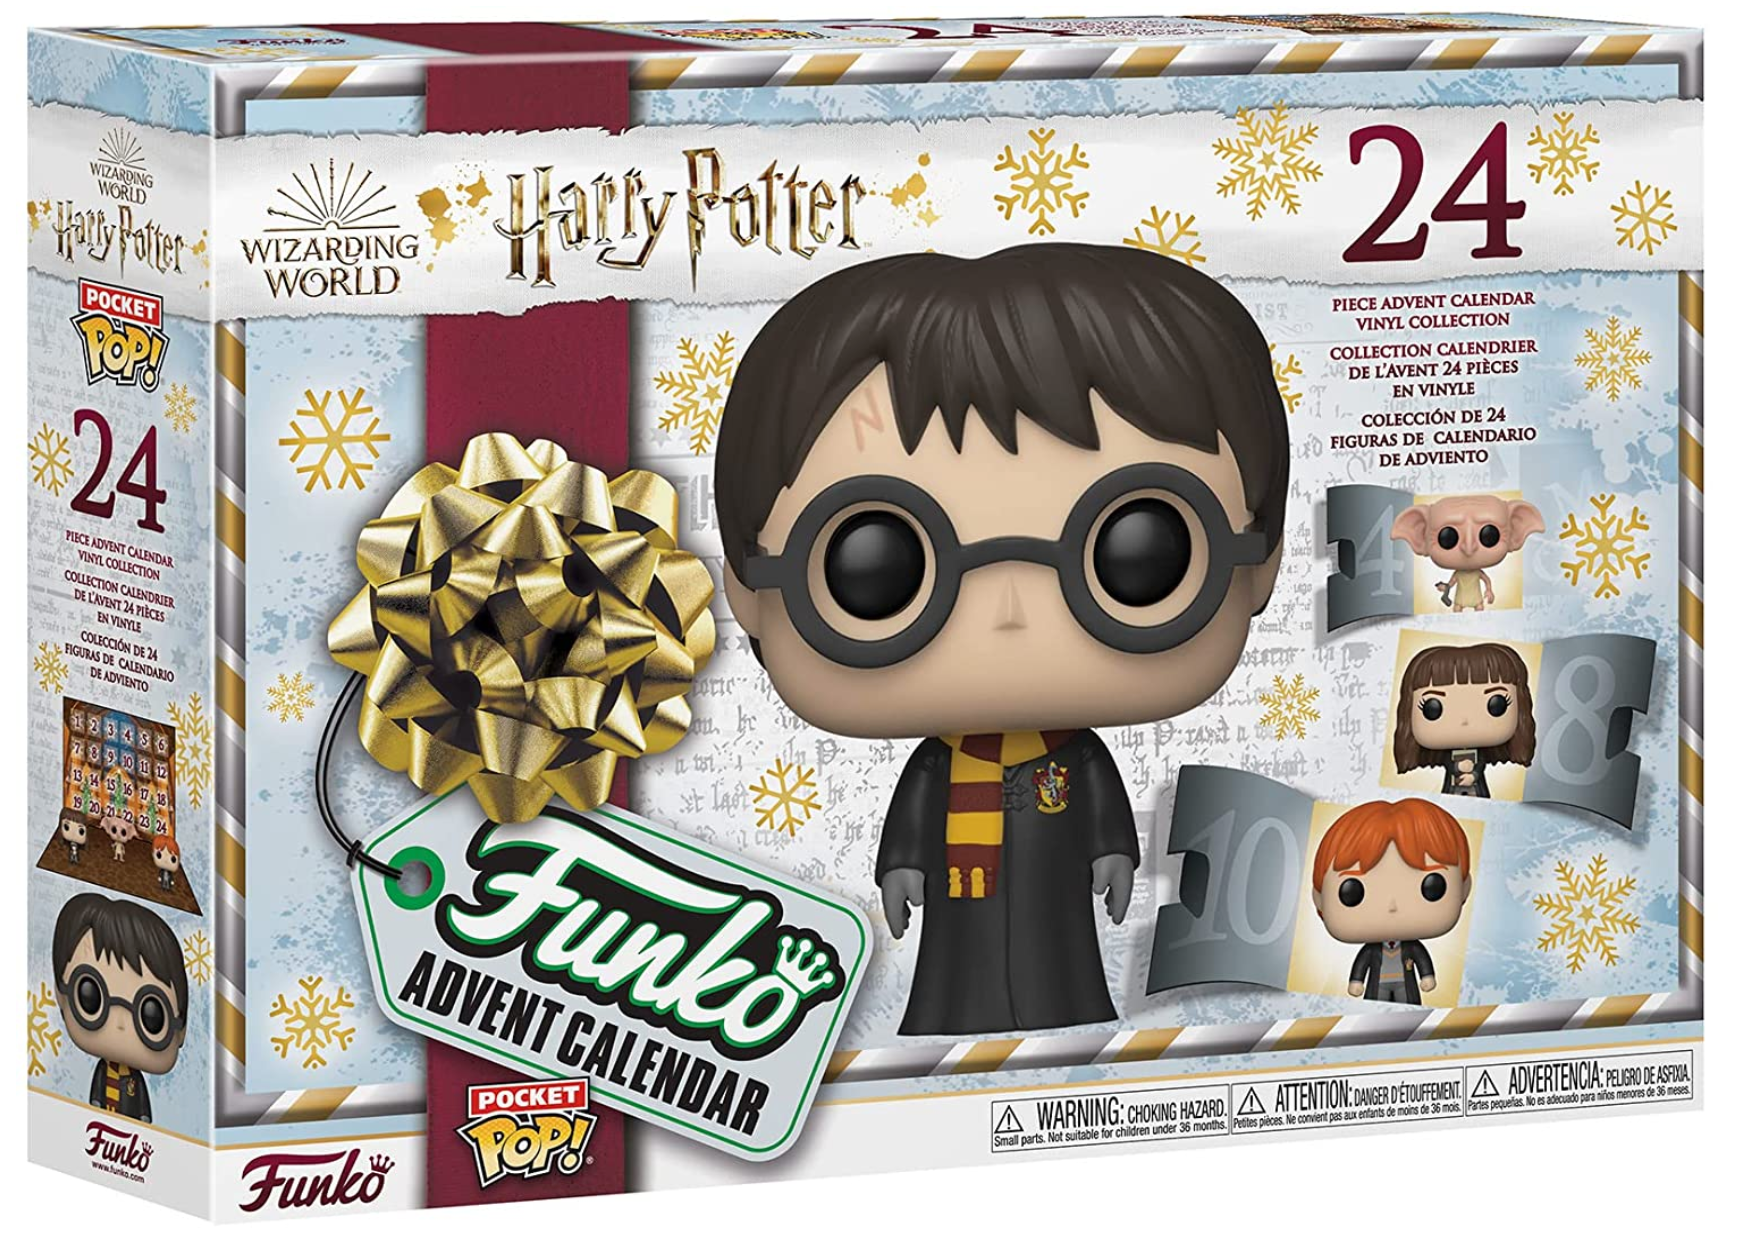 Harry Potter Hogwarts Castle 1,000 piece puzzle - Sunnyside Gift Shop